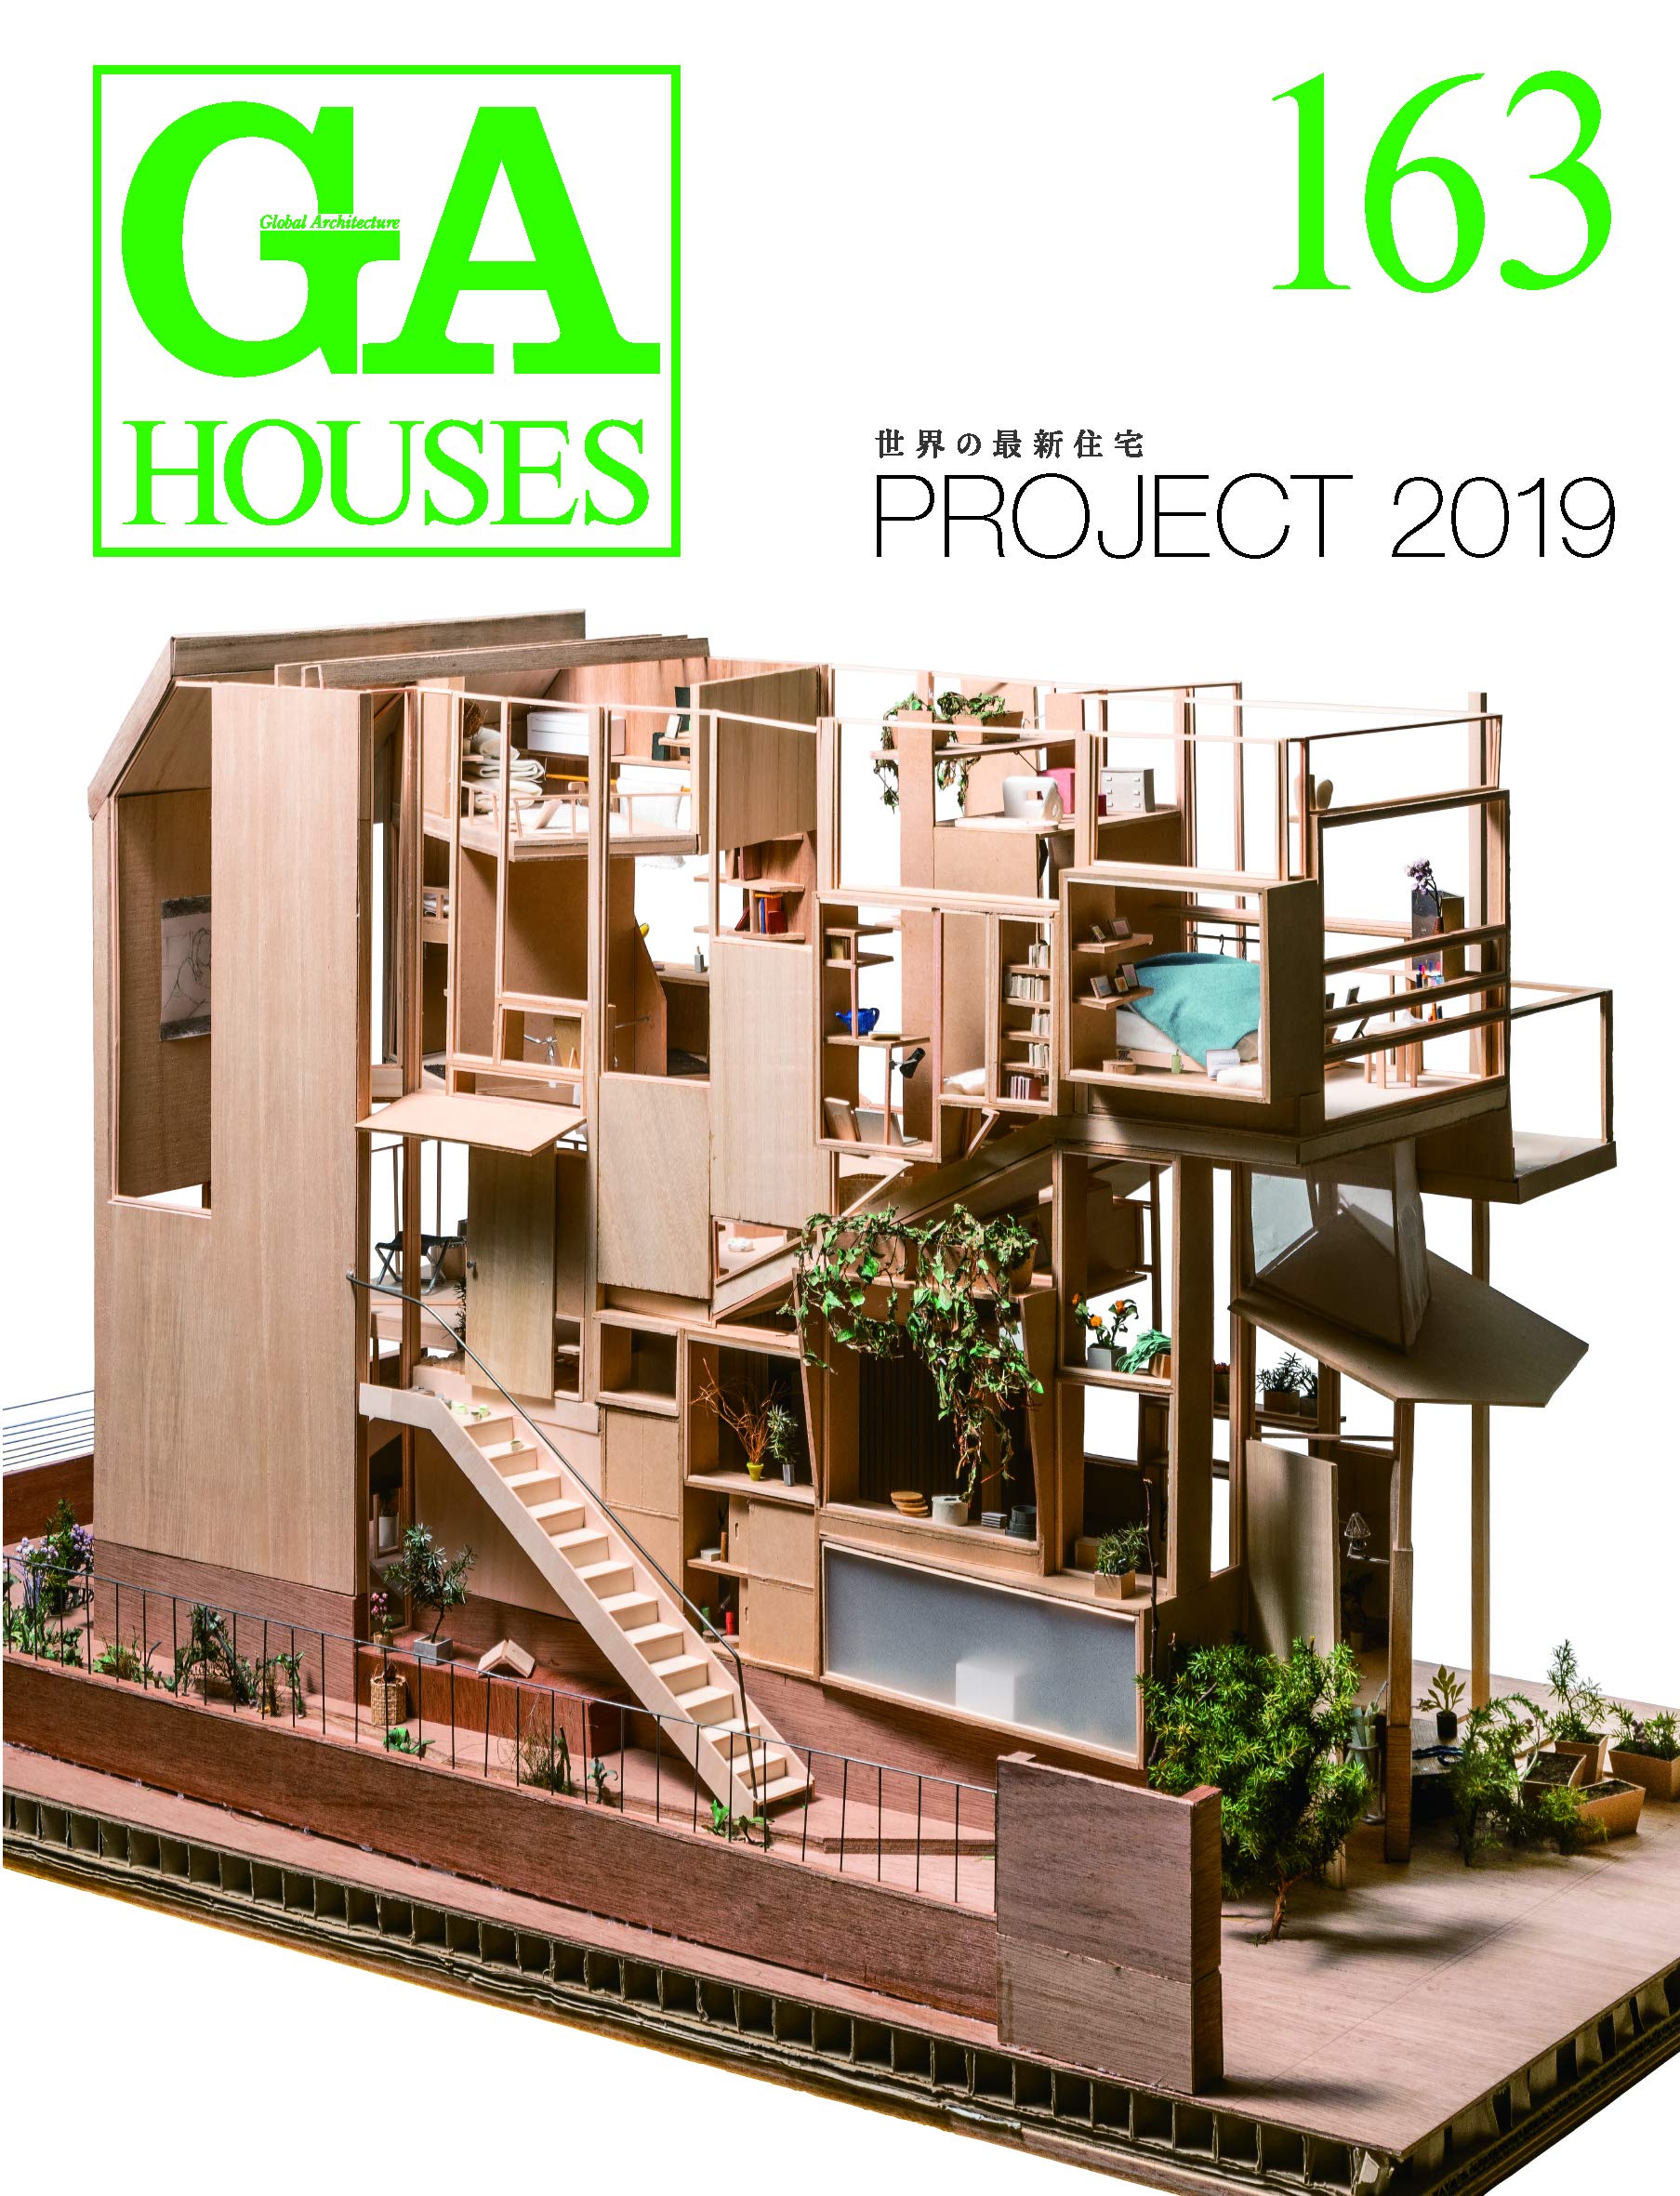 GA Houses 163 - Project 2019